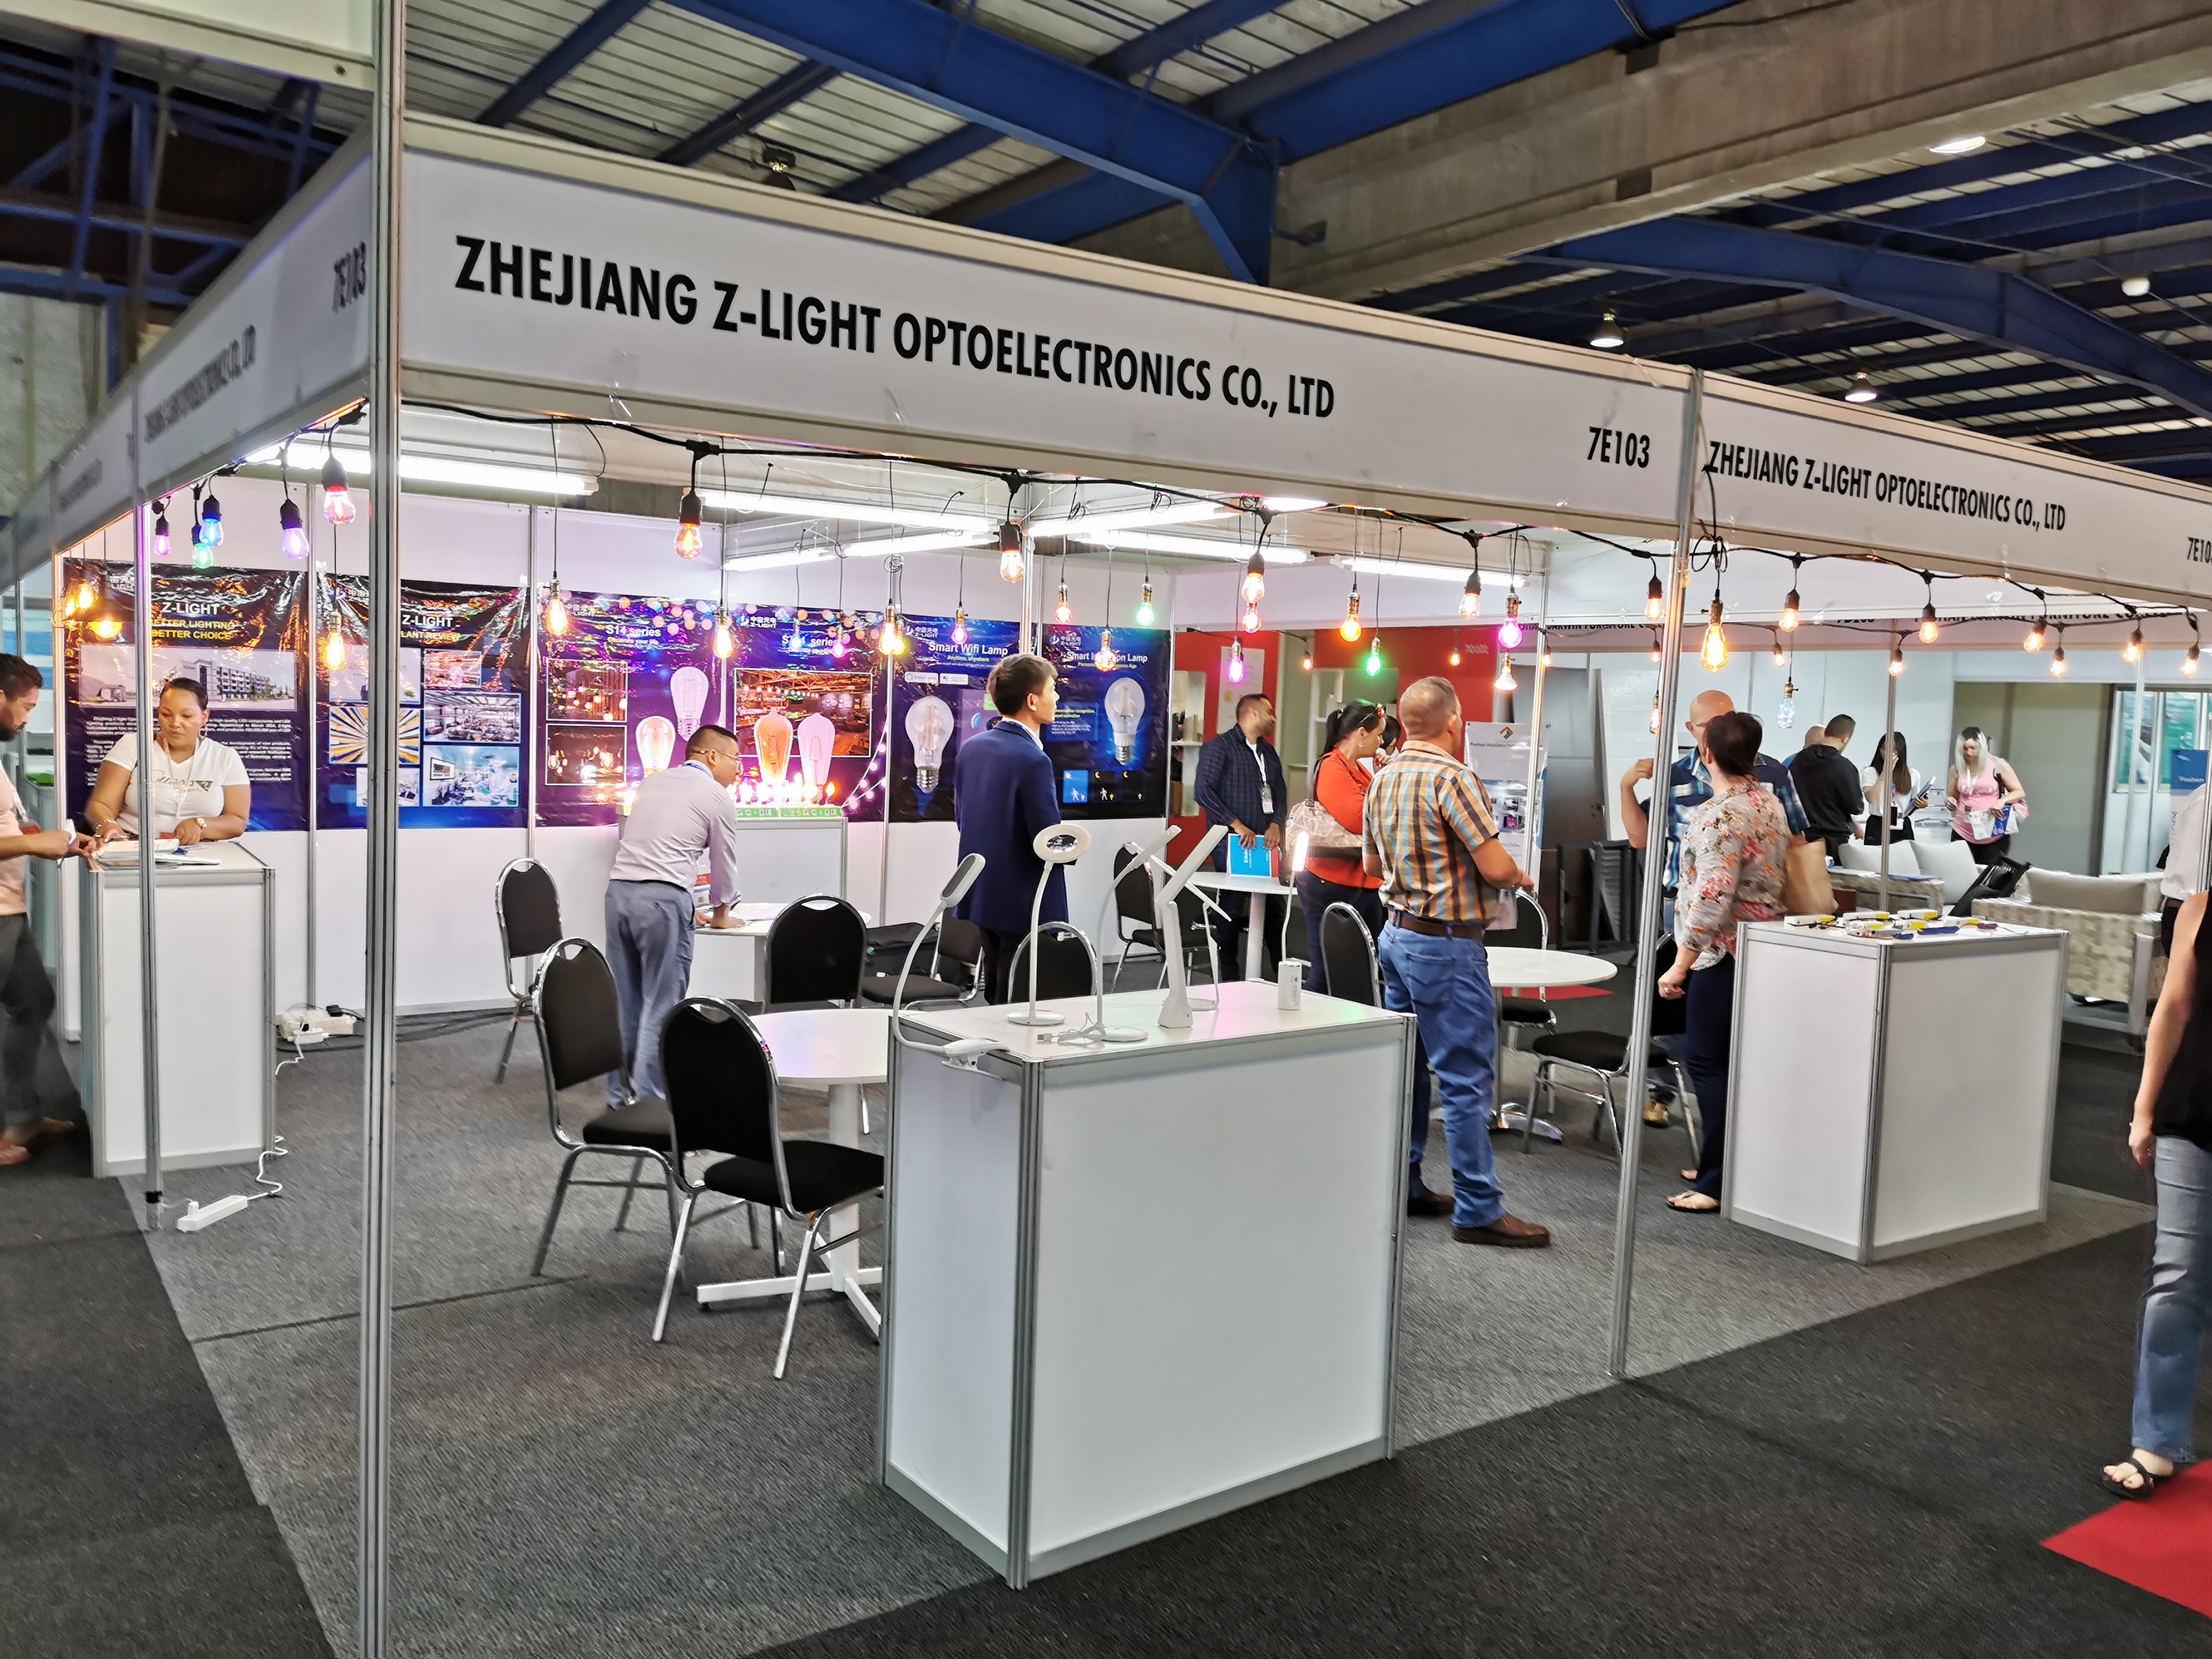 Zhejiang Z-light Optoelectronics Co.,Ltd